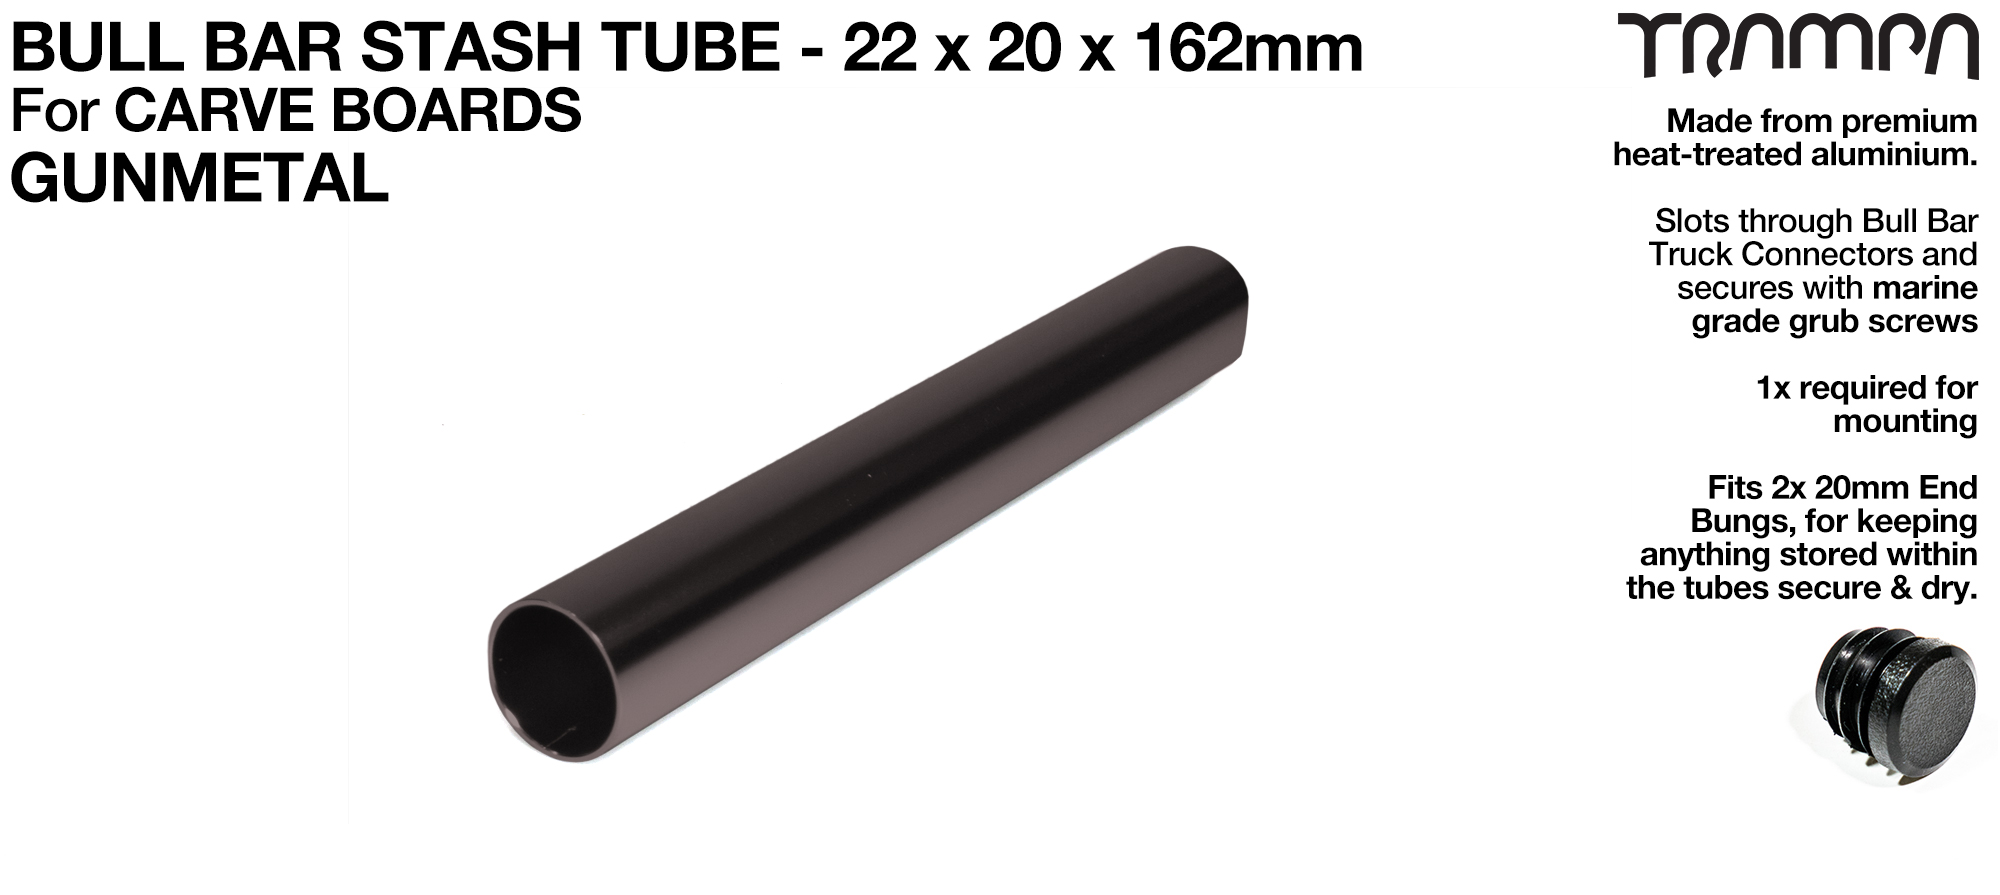 Carve Board Bull Bar Hollow Aluminium Stash Tube - GUNMETAL 22 x 20 x 162 mm